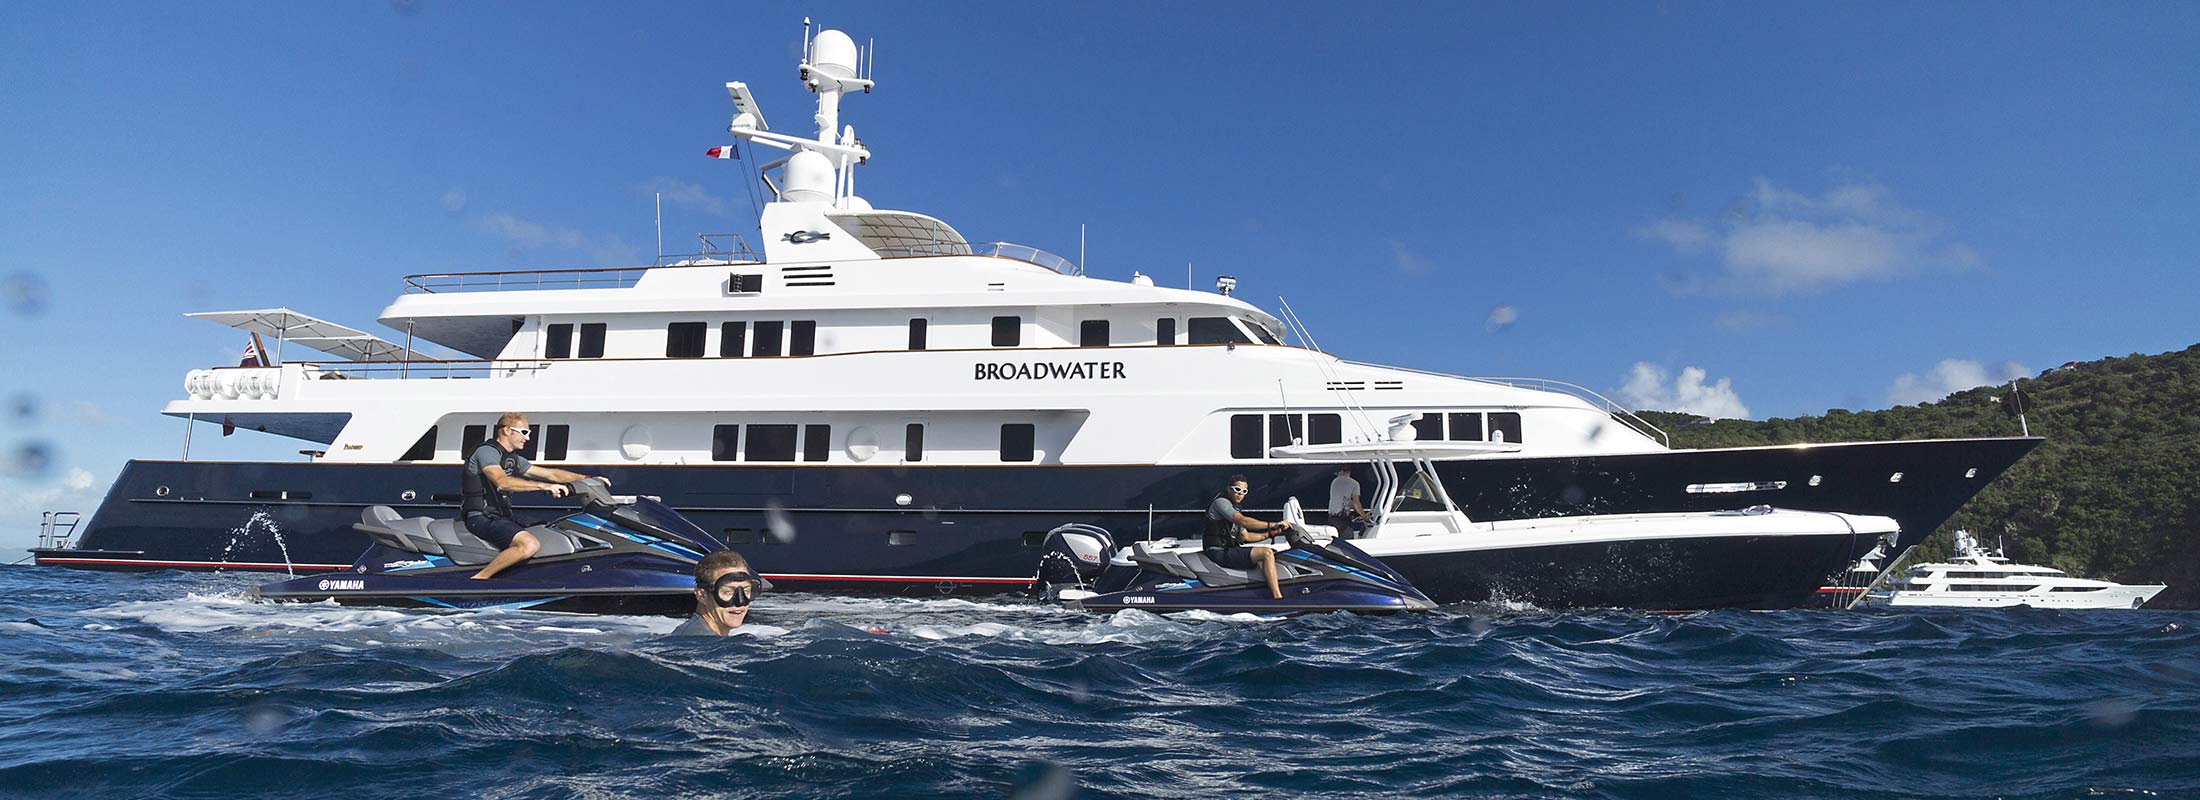 Broadwater Motor Yacht for Charter Mediterranean Caribbean Sea slider 2